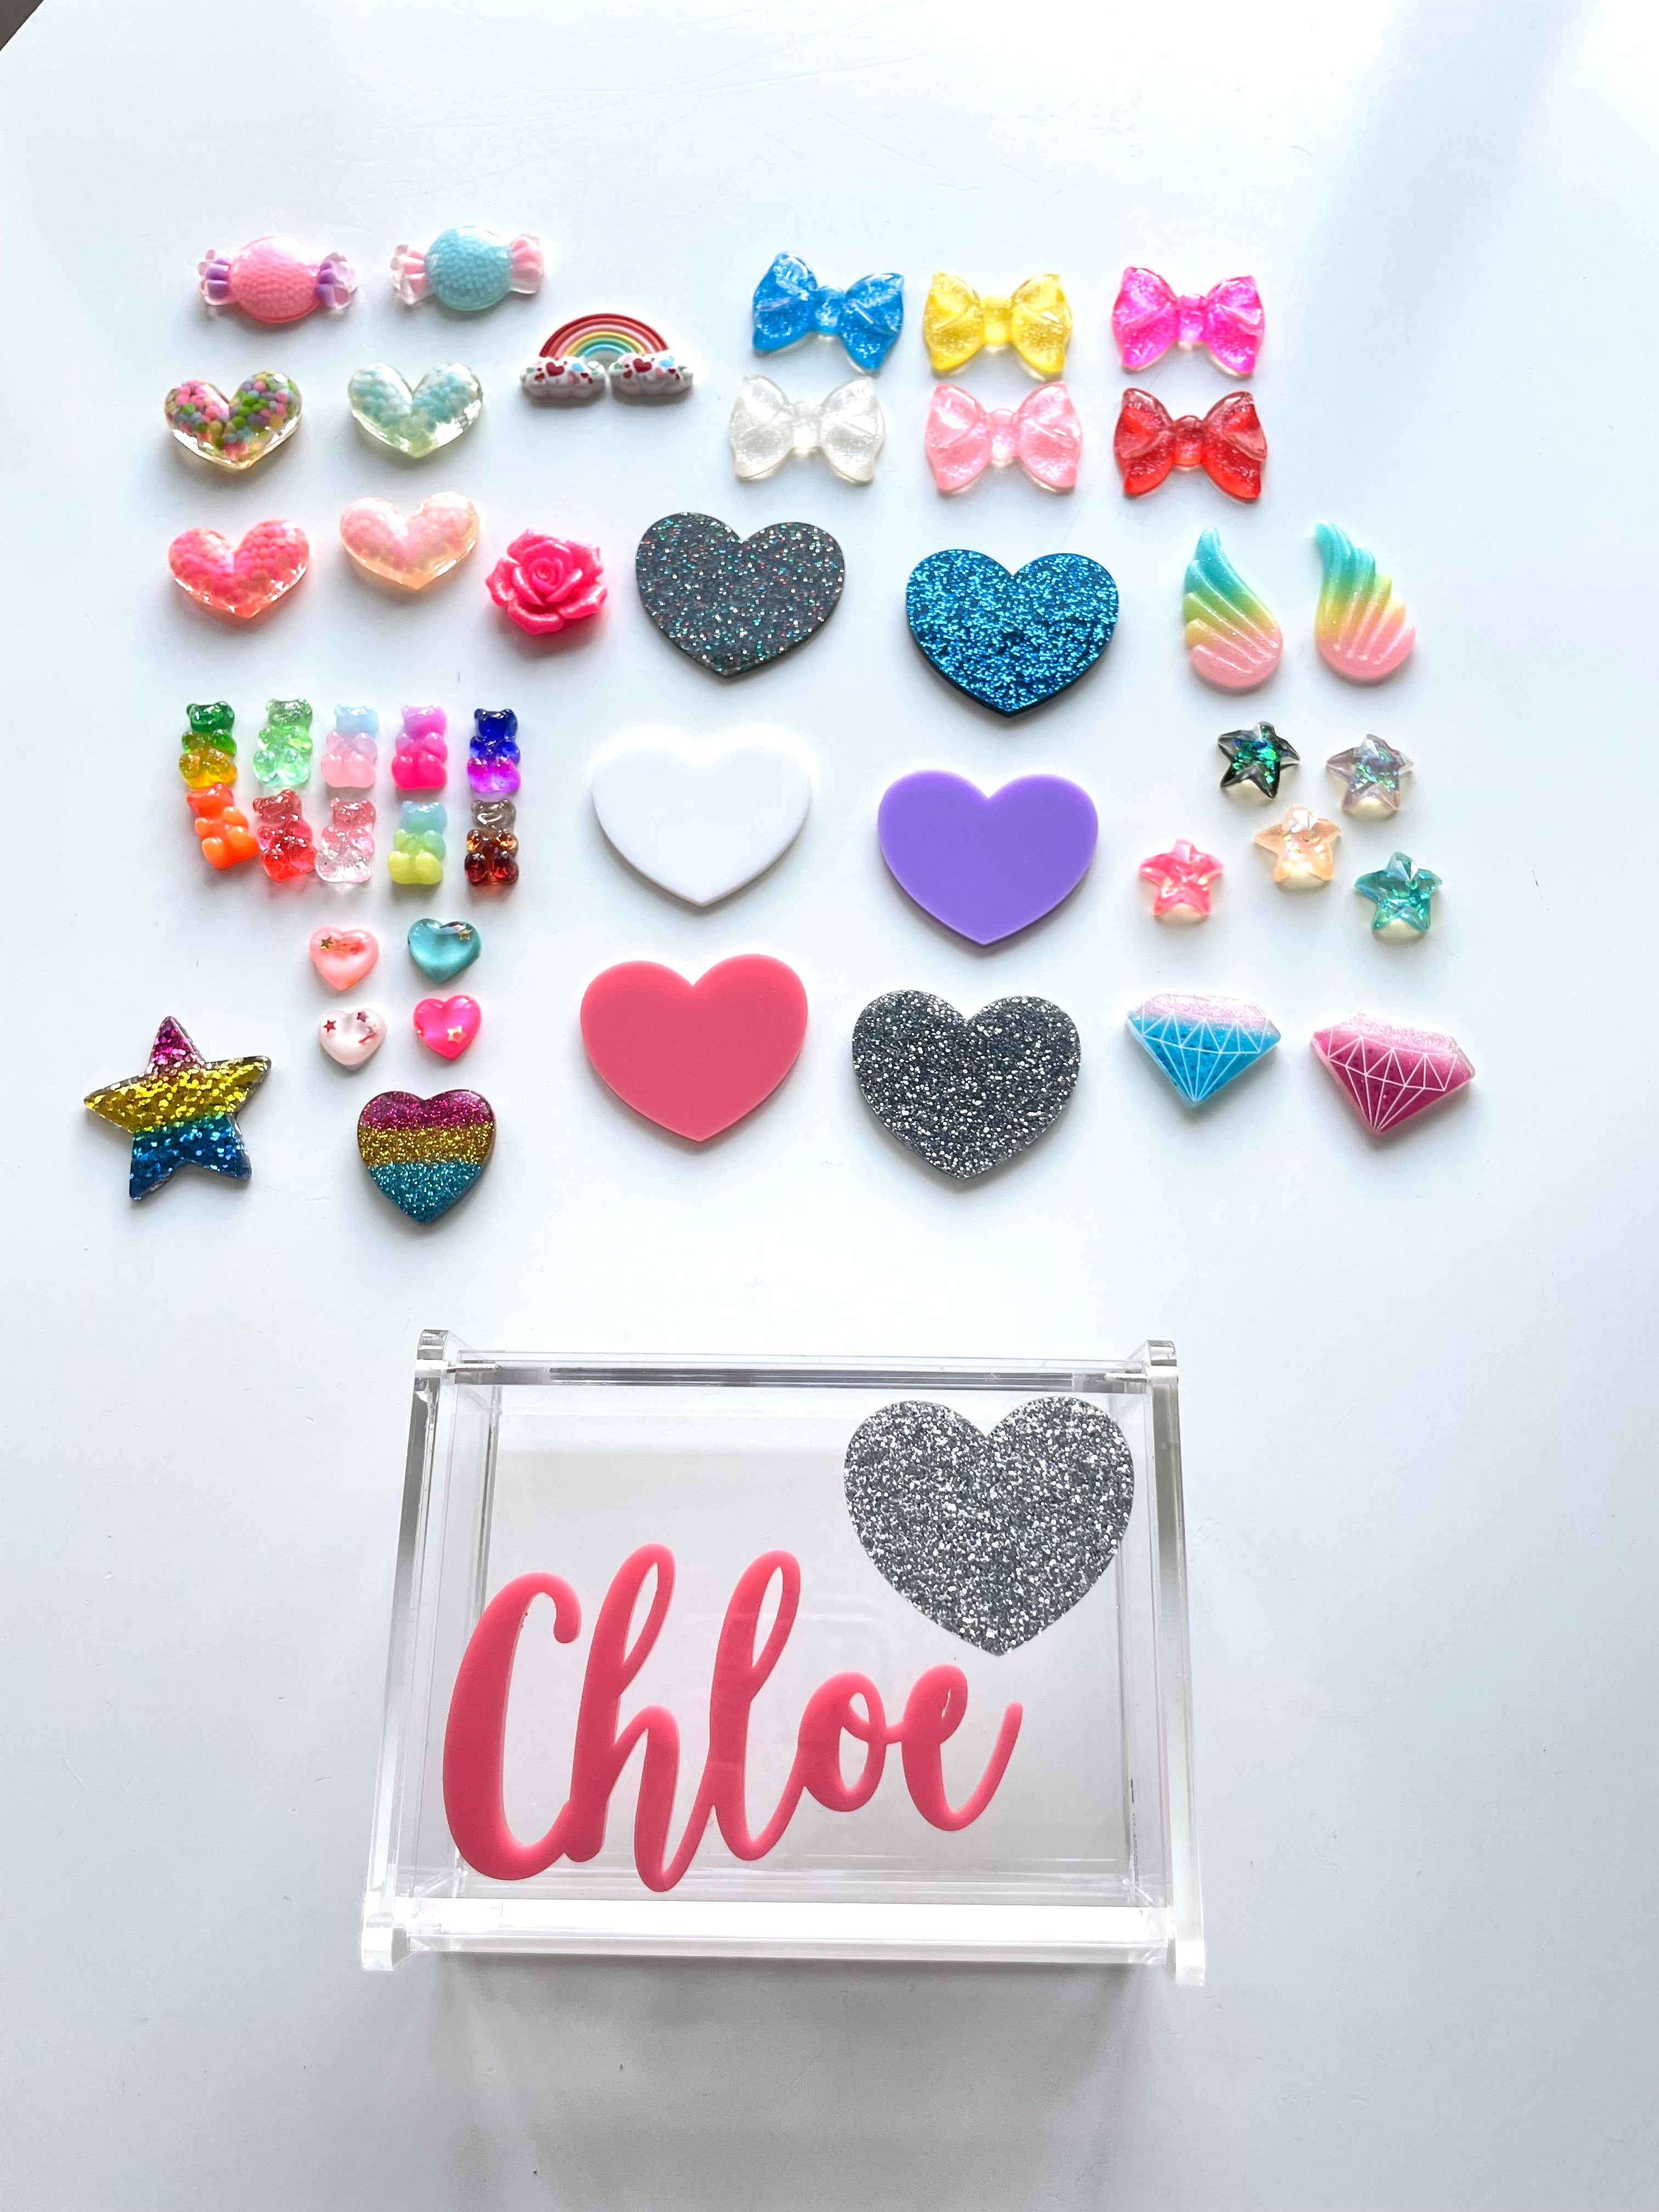 The Chloe Catchall, Custom Catchall Jewelry Box